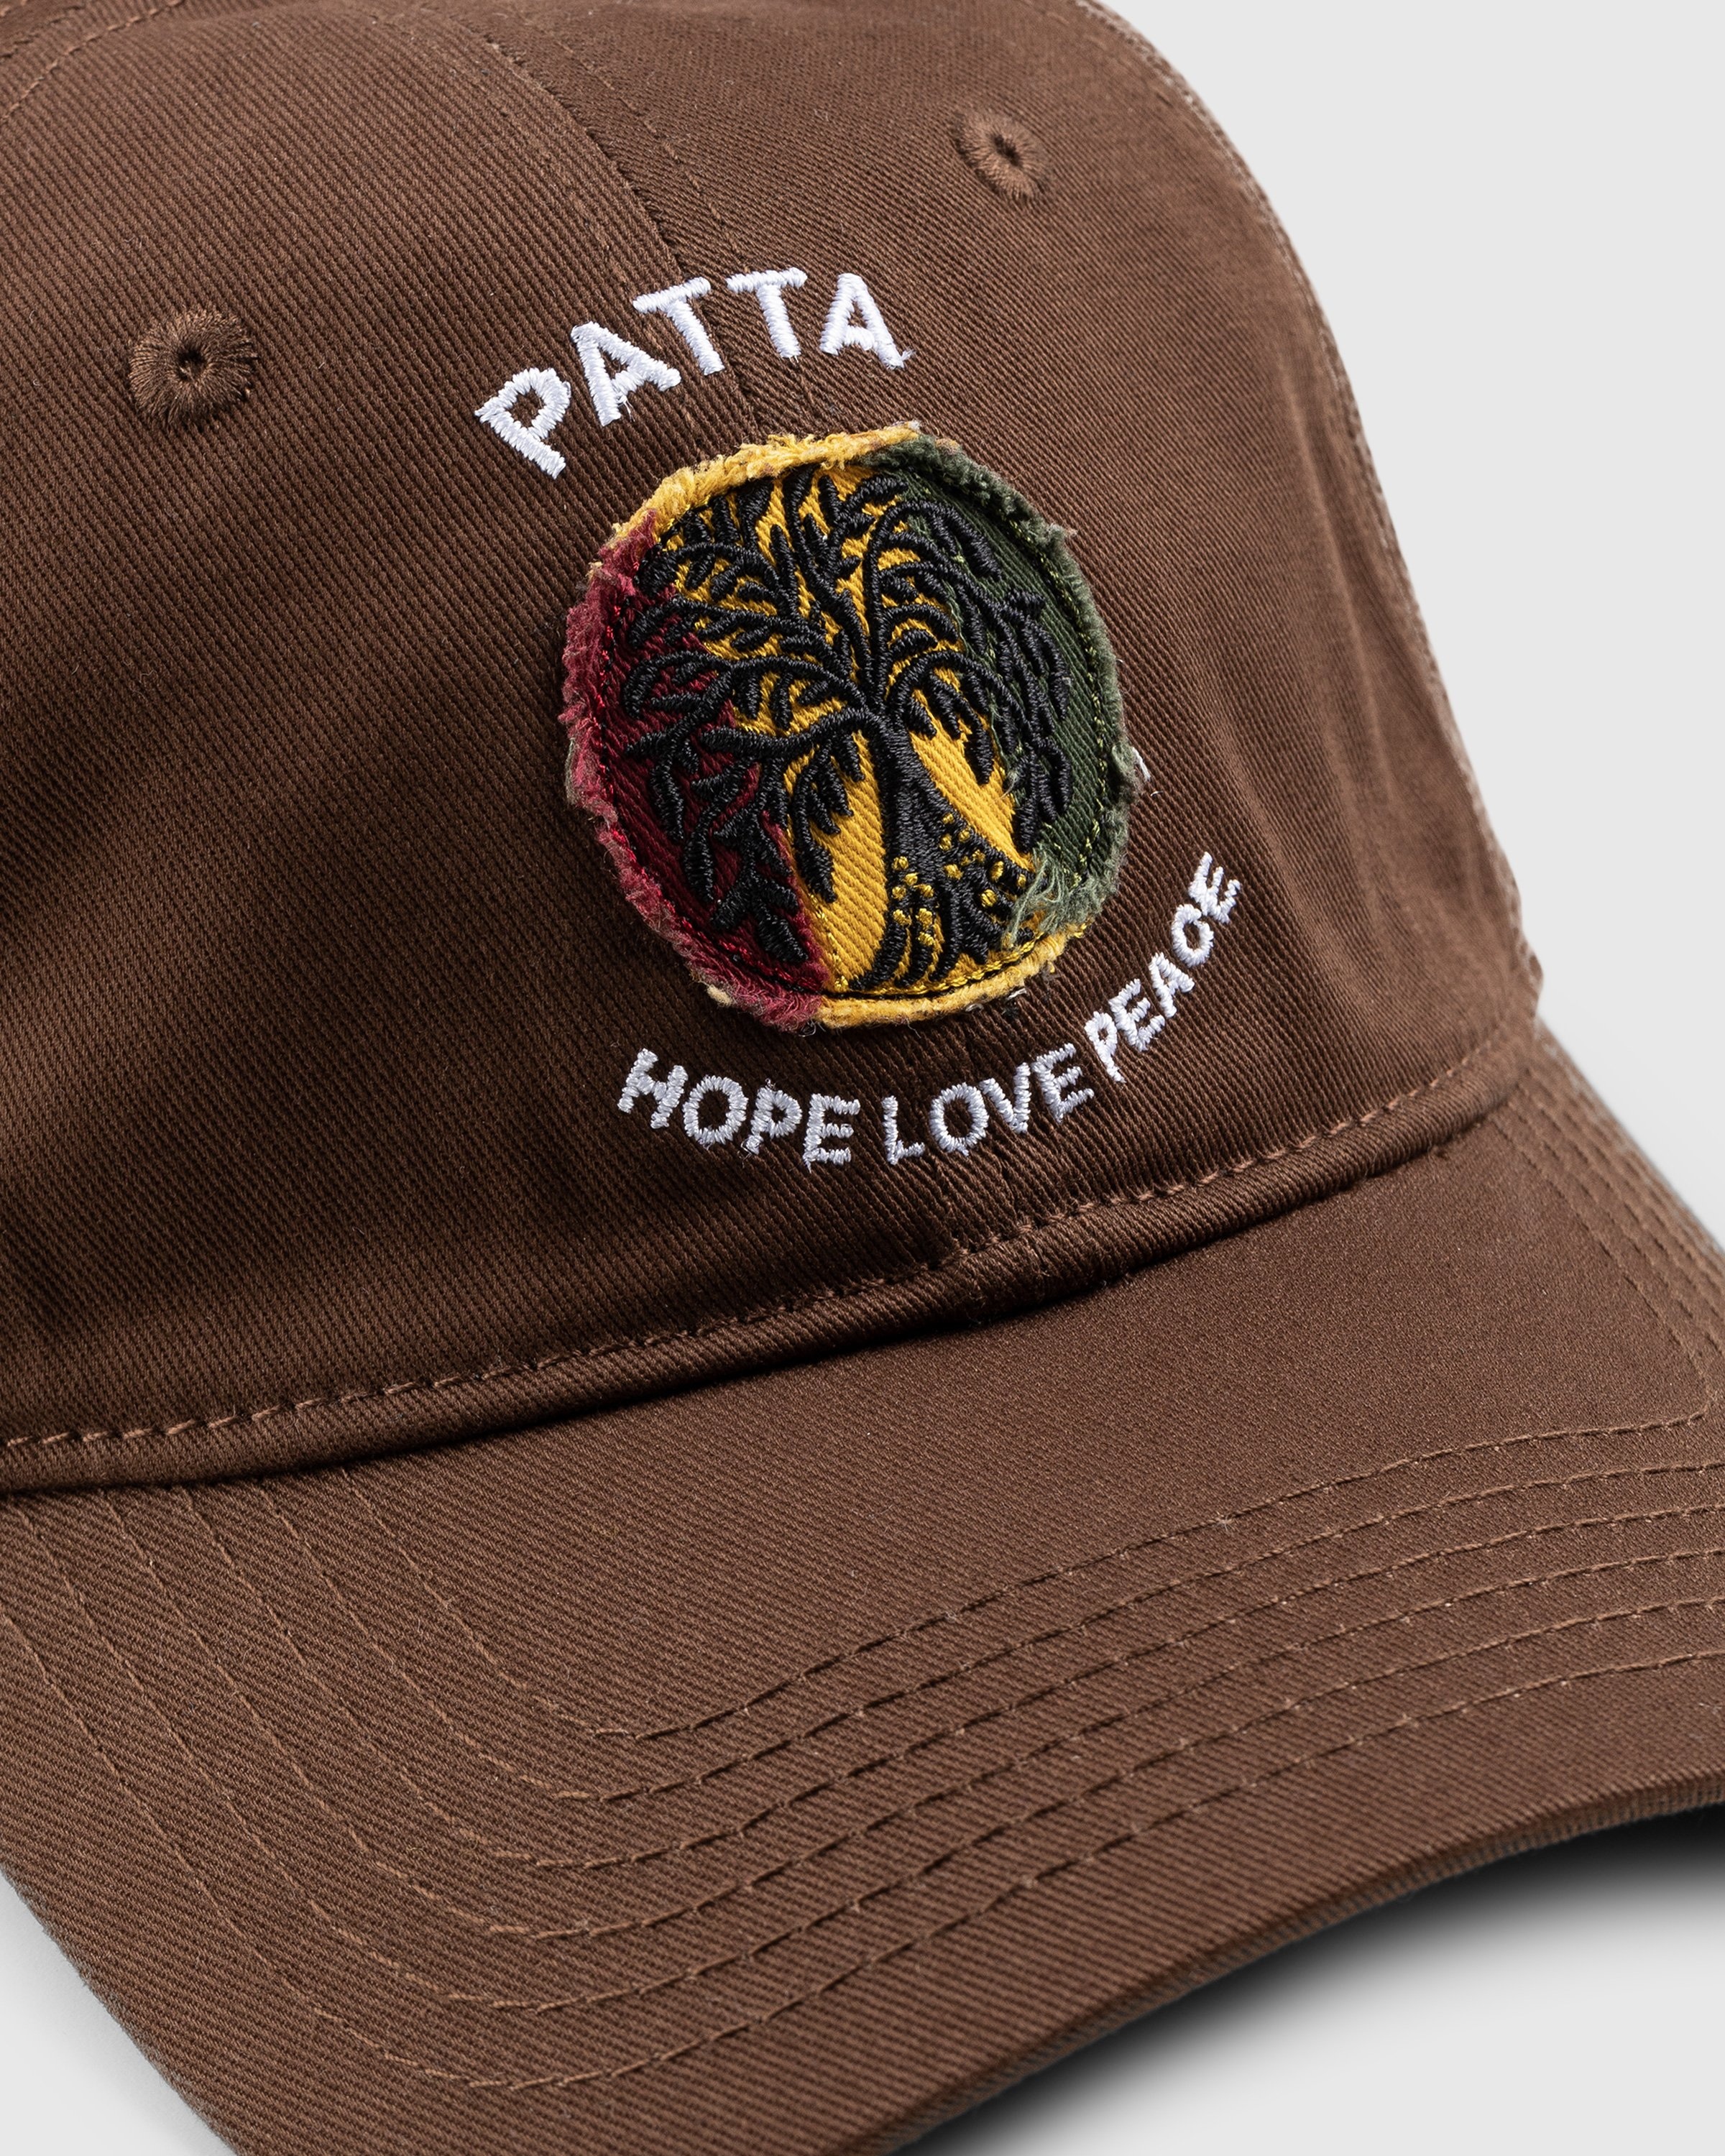 Patta – Hope Love Peace Sports Cap - Caps - Brown - Image 4